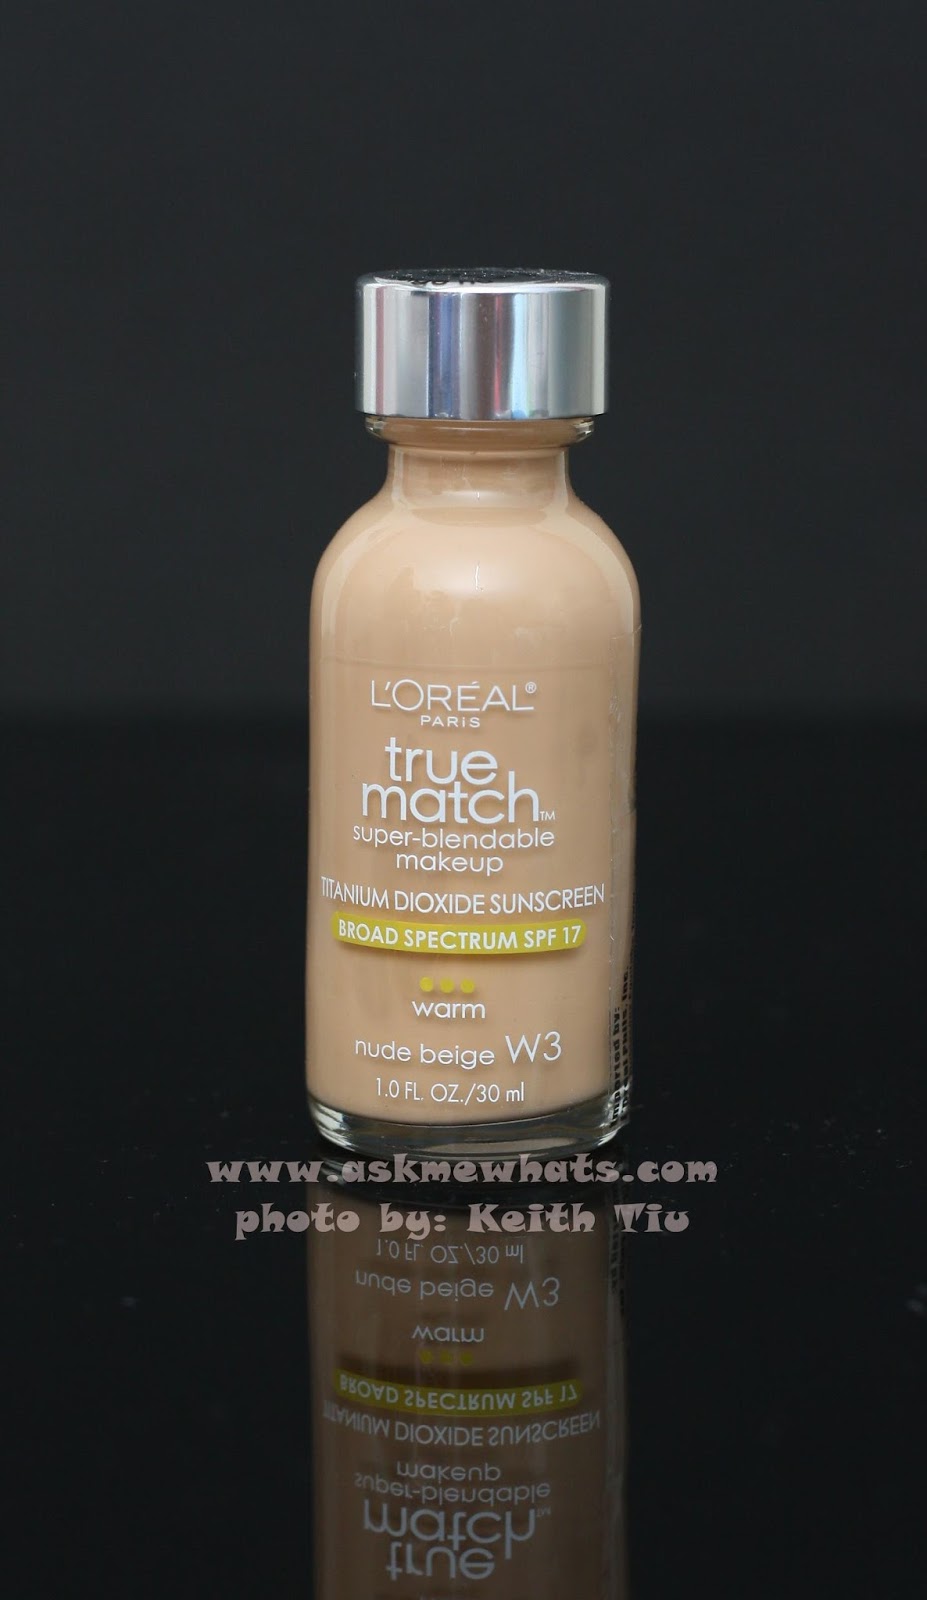 AMW Reviews: L'Oreal Match Super-Blendable MakeUp (Nude Beige)